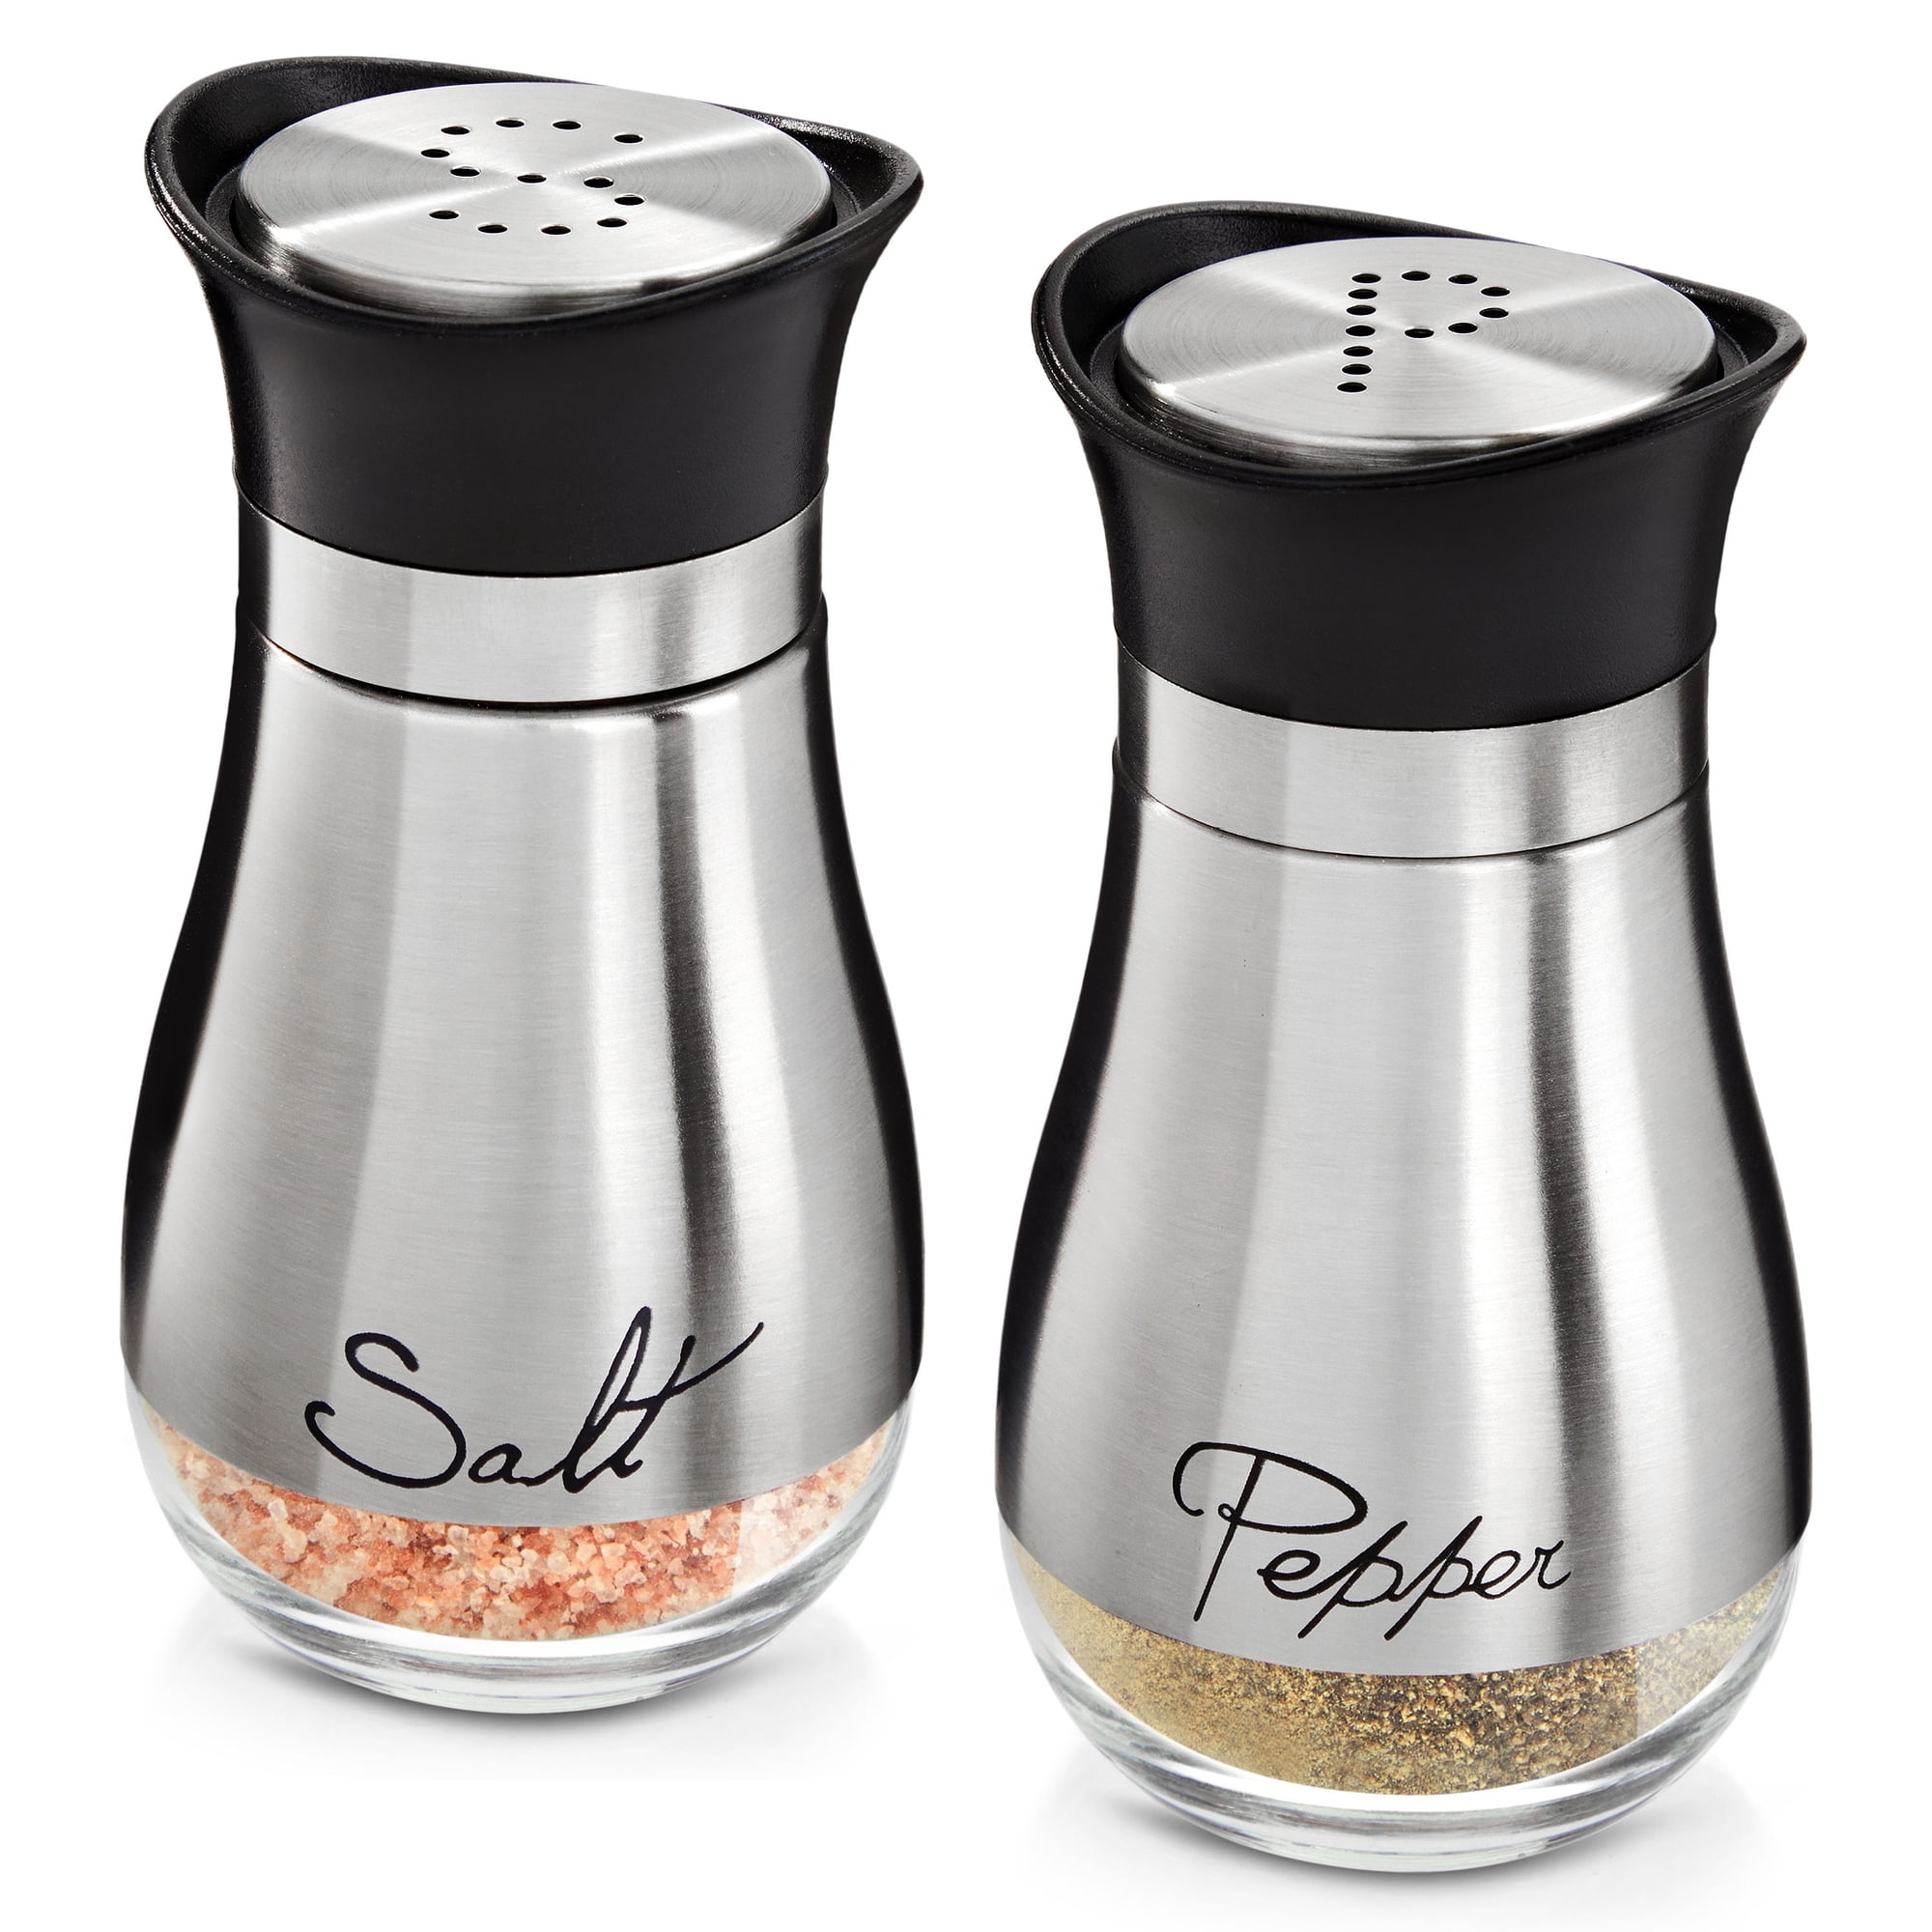 Salt and Pepper Shaker Set (Clear Glass) USA Seller Restaurant Quality